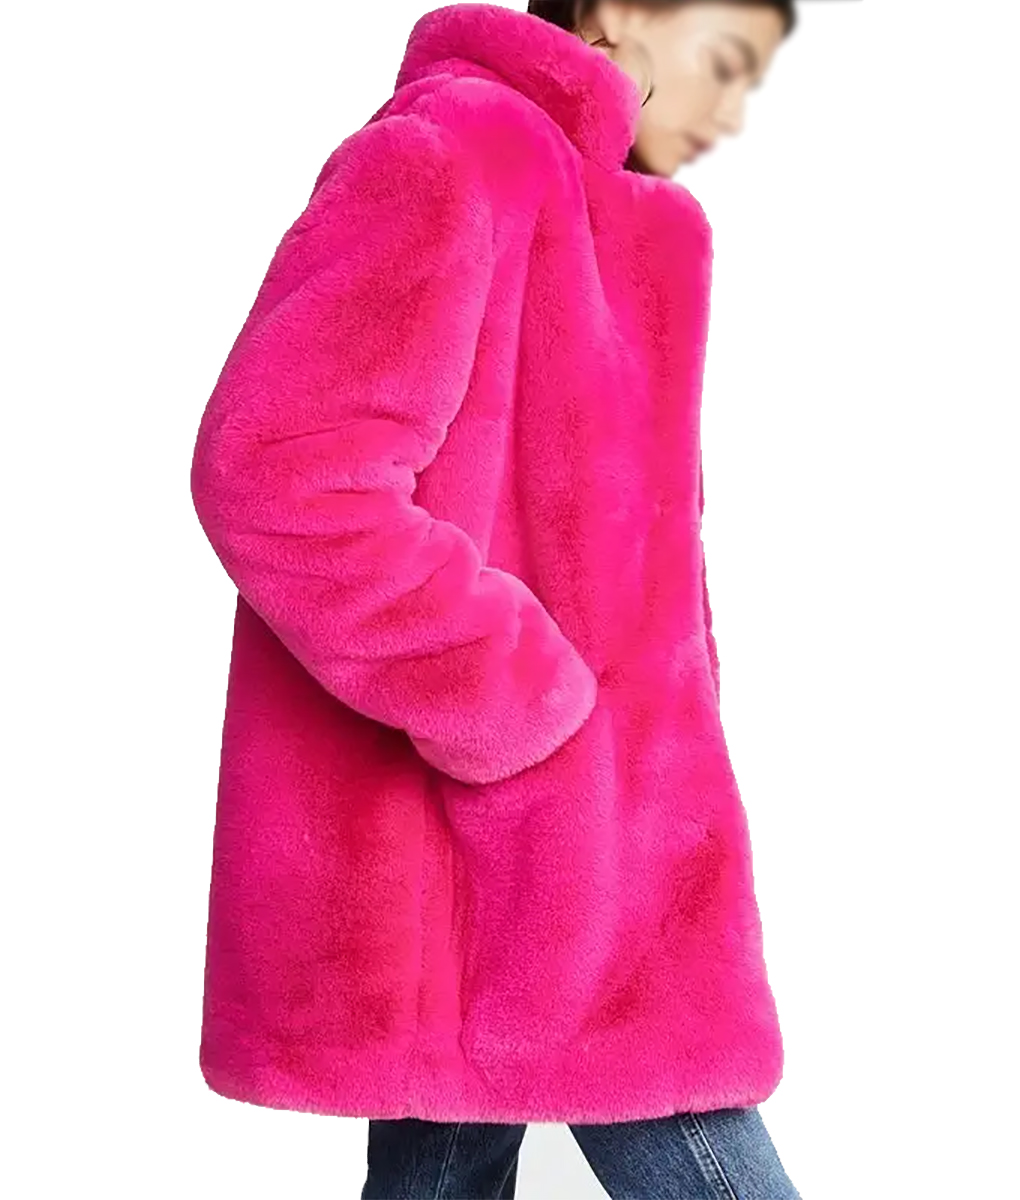 Taylor Swift Pink Fur Coat (3)